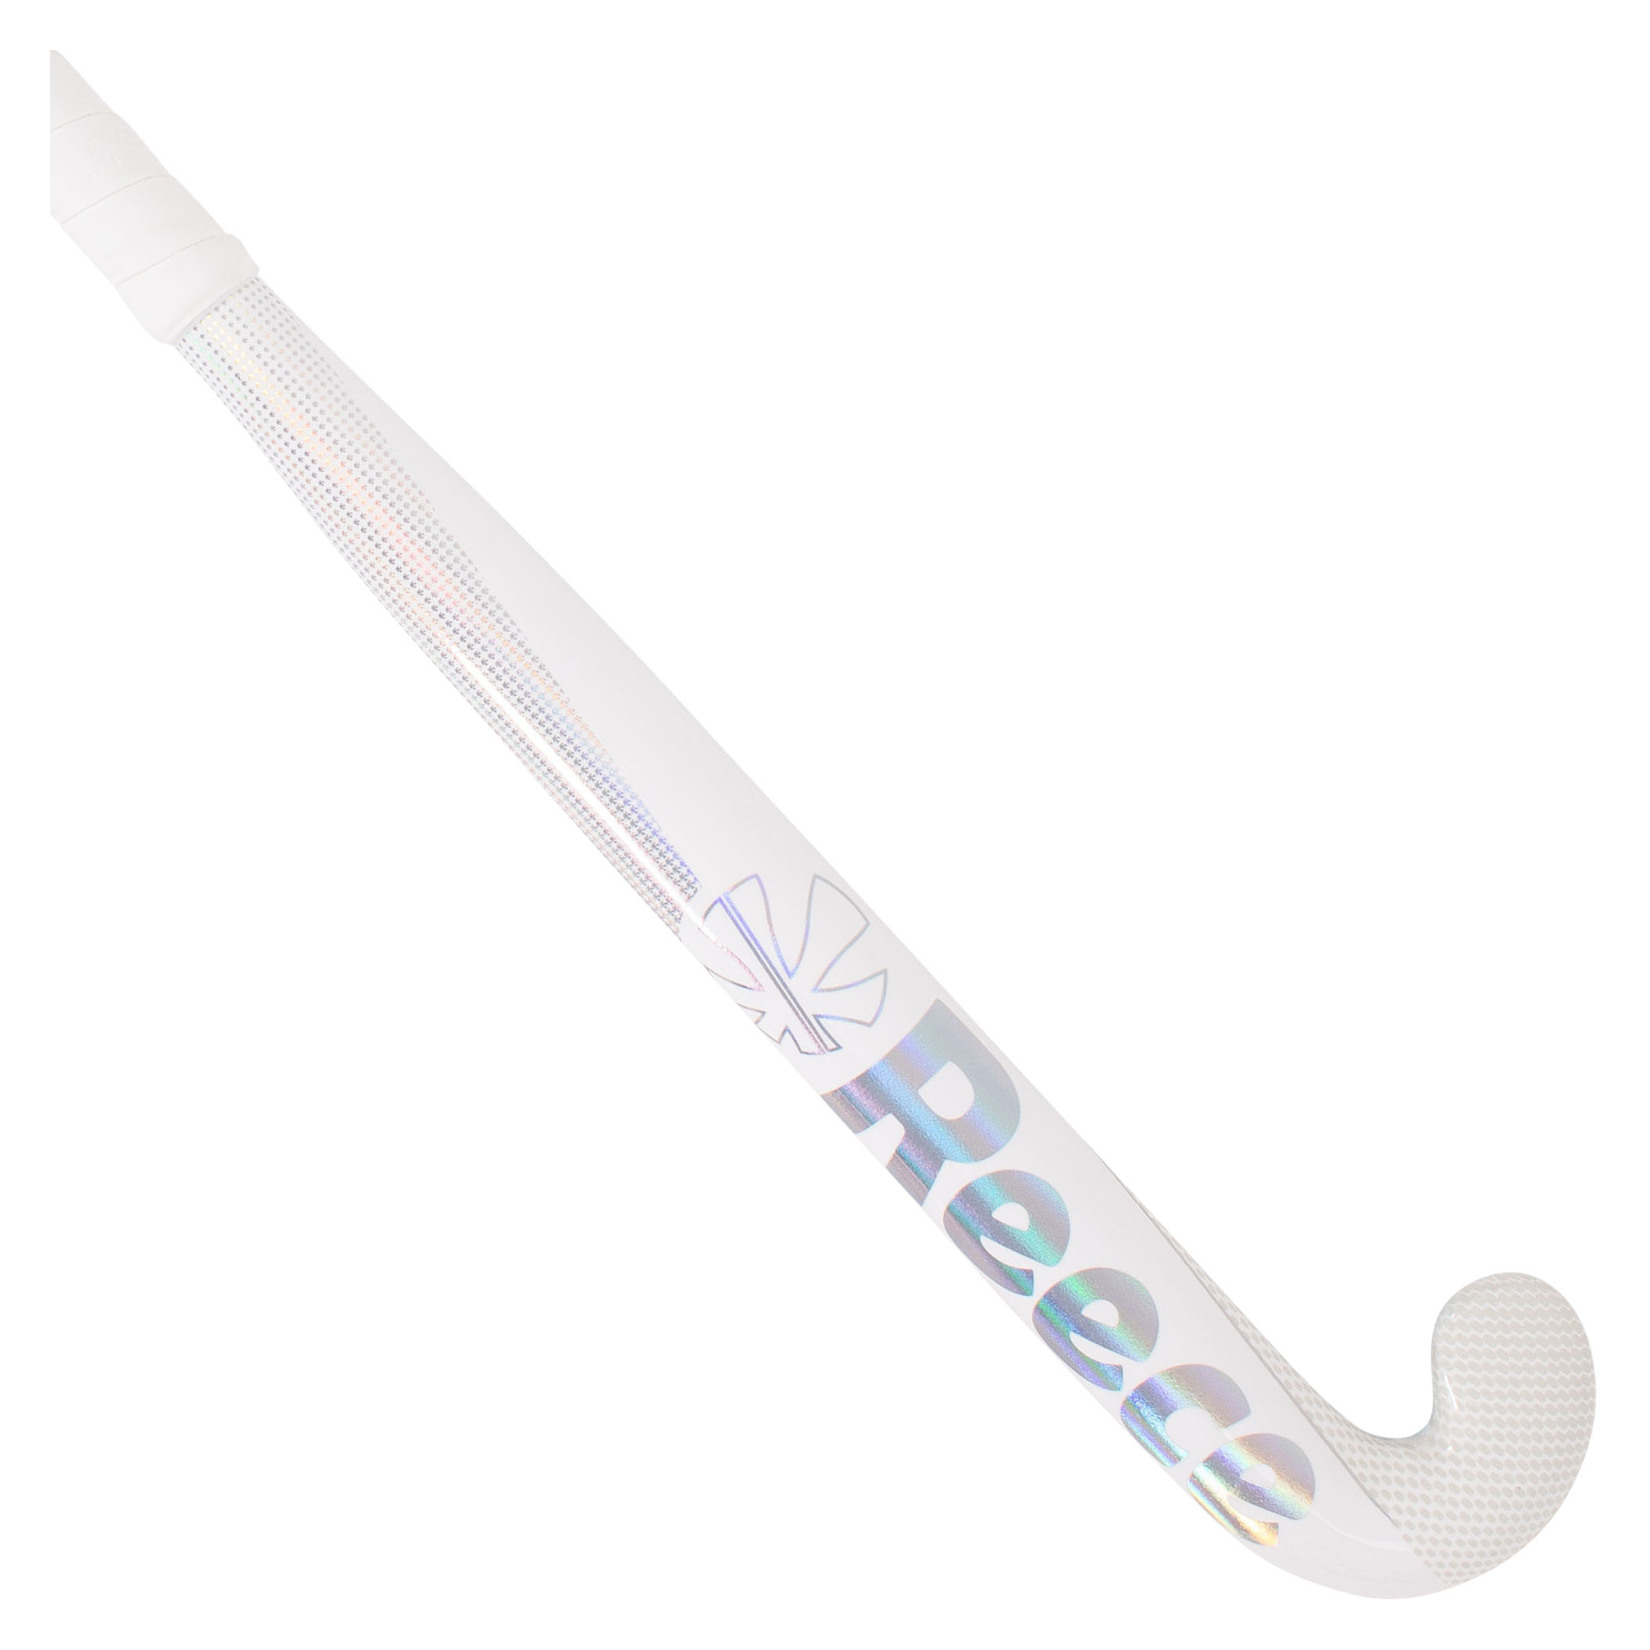 Reece Blizzard 600 Hockey Stick